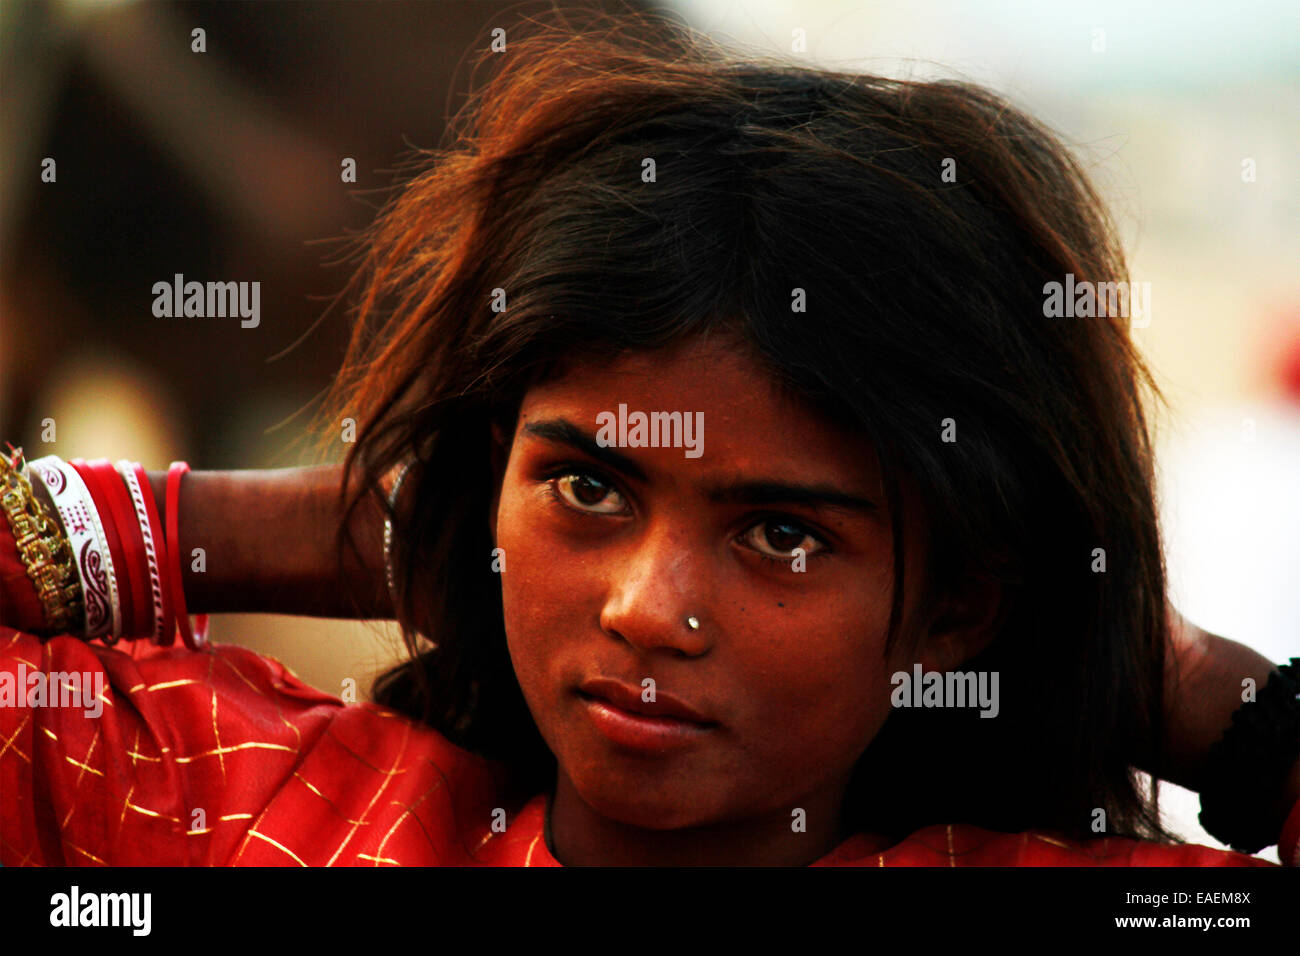 Child, girl, poor, villager, indian pushkar, Rajasthan, India. Stock Photo